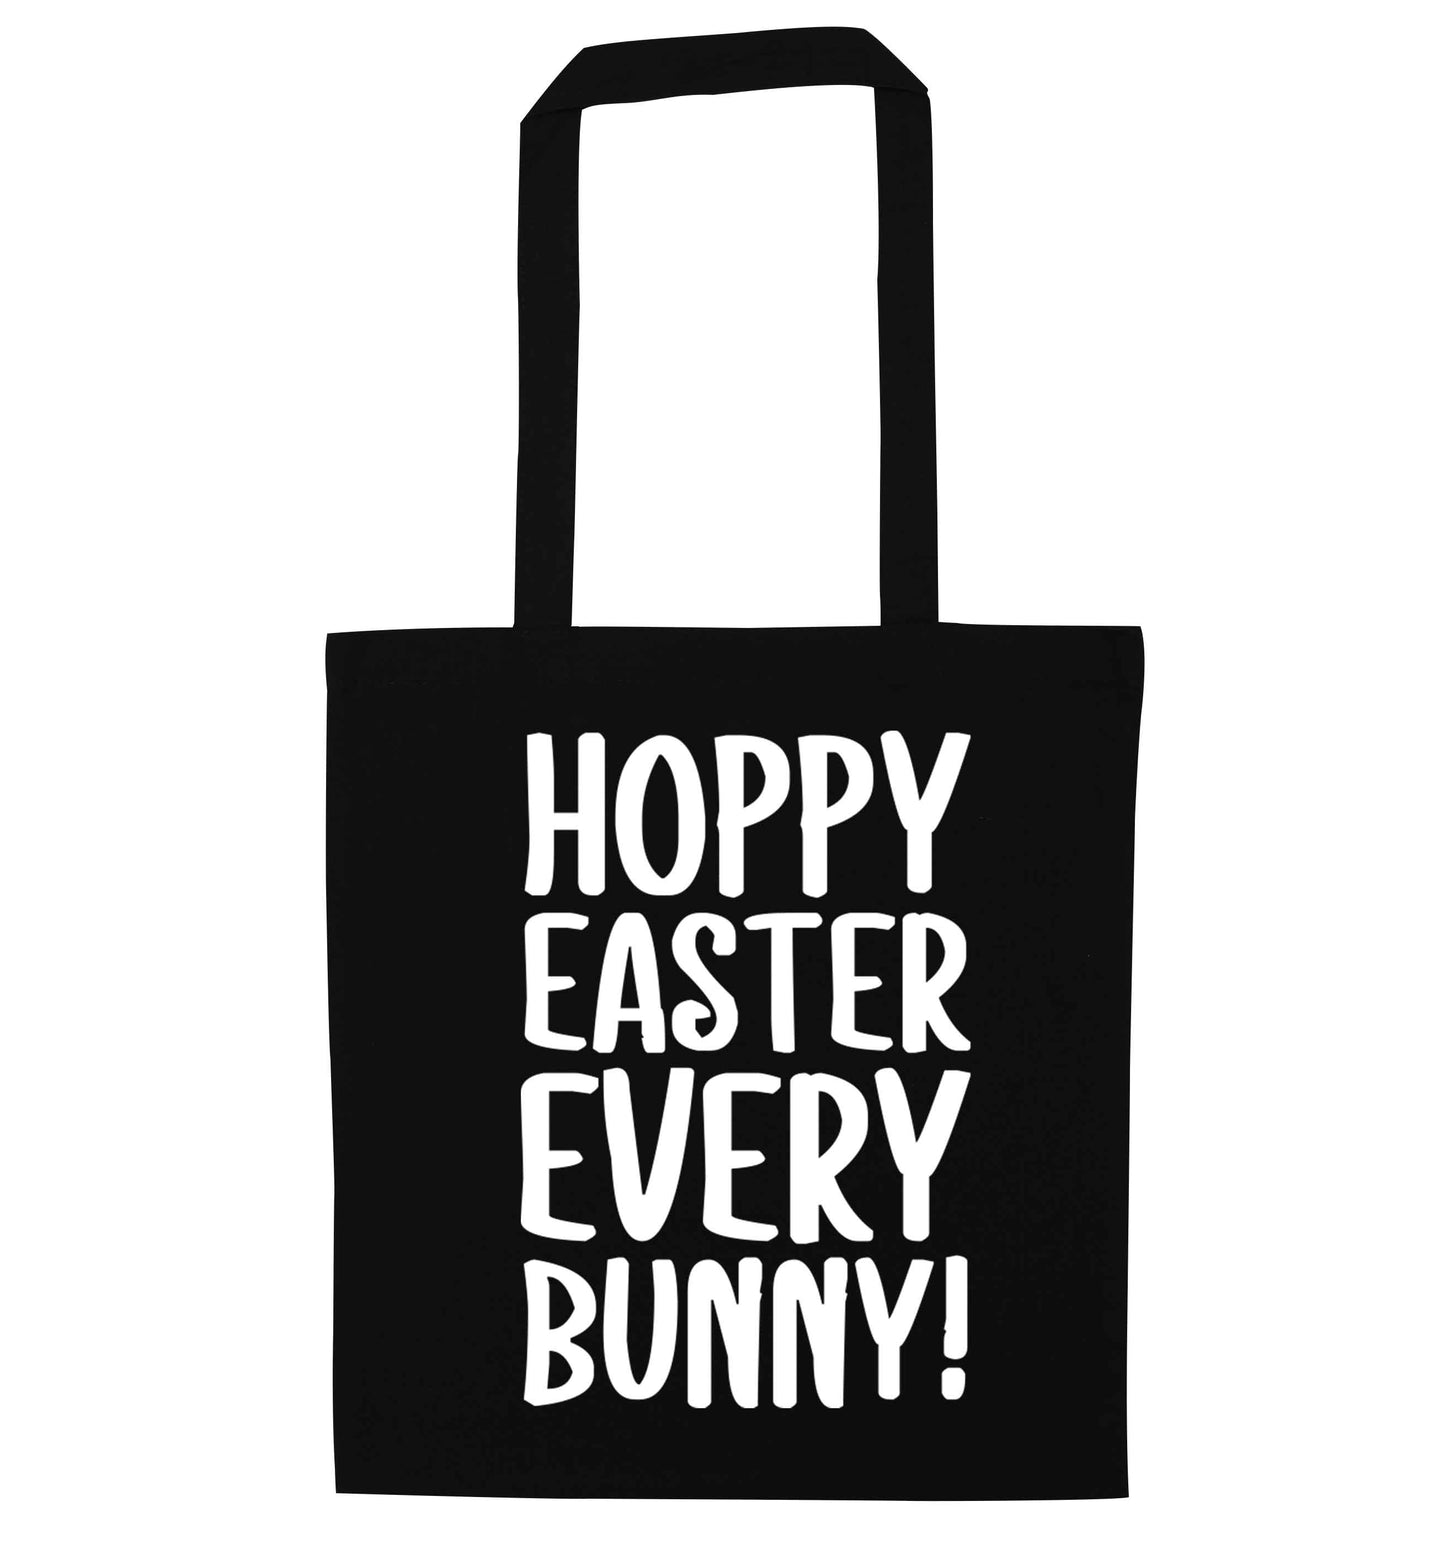 Hoppy Easter every bunny! black tote bag